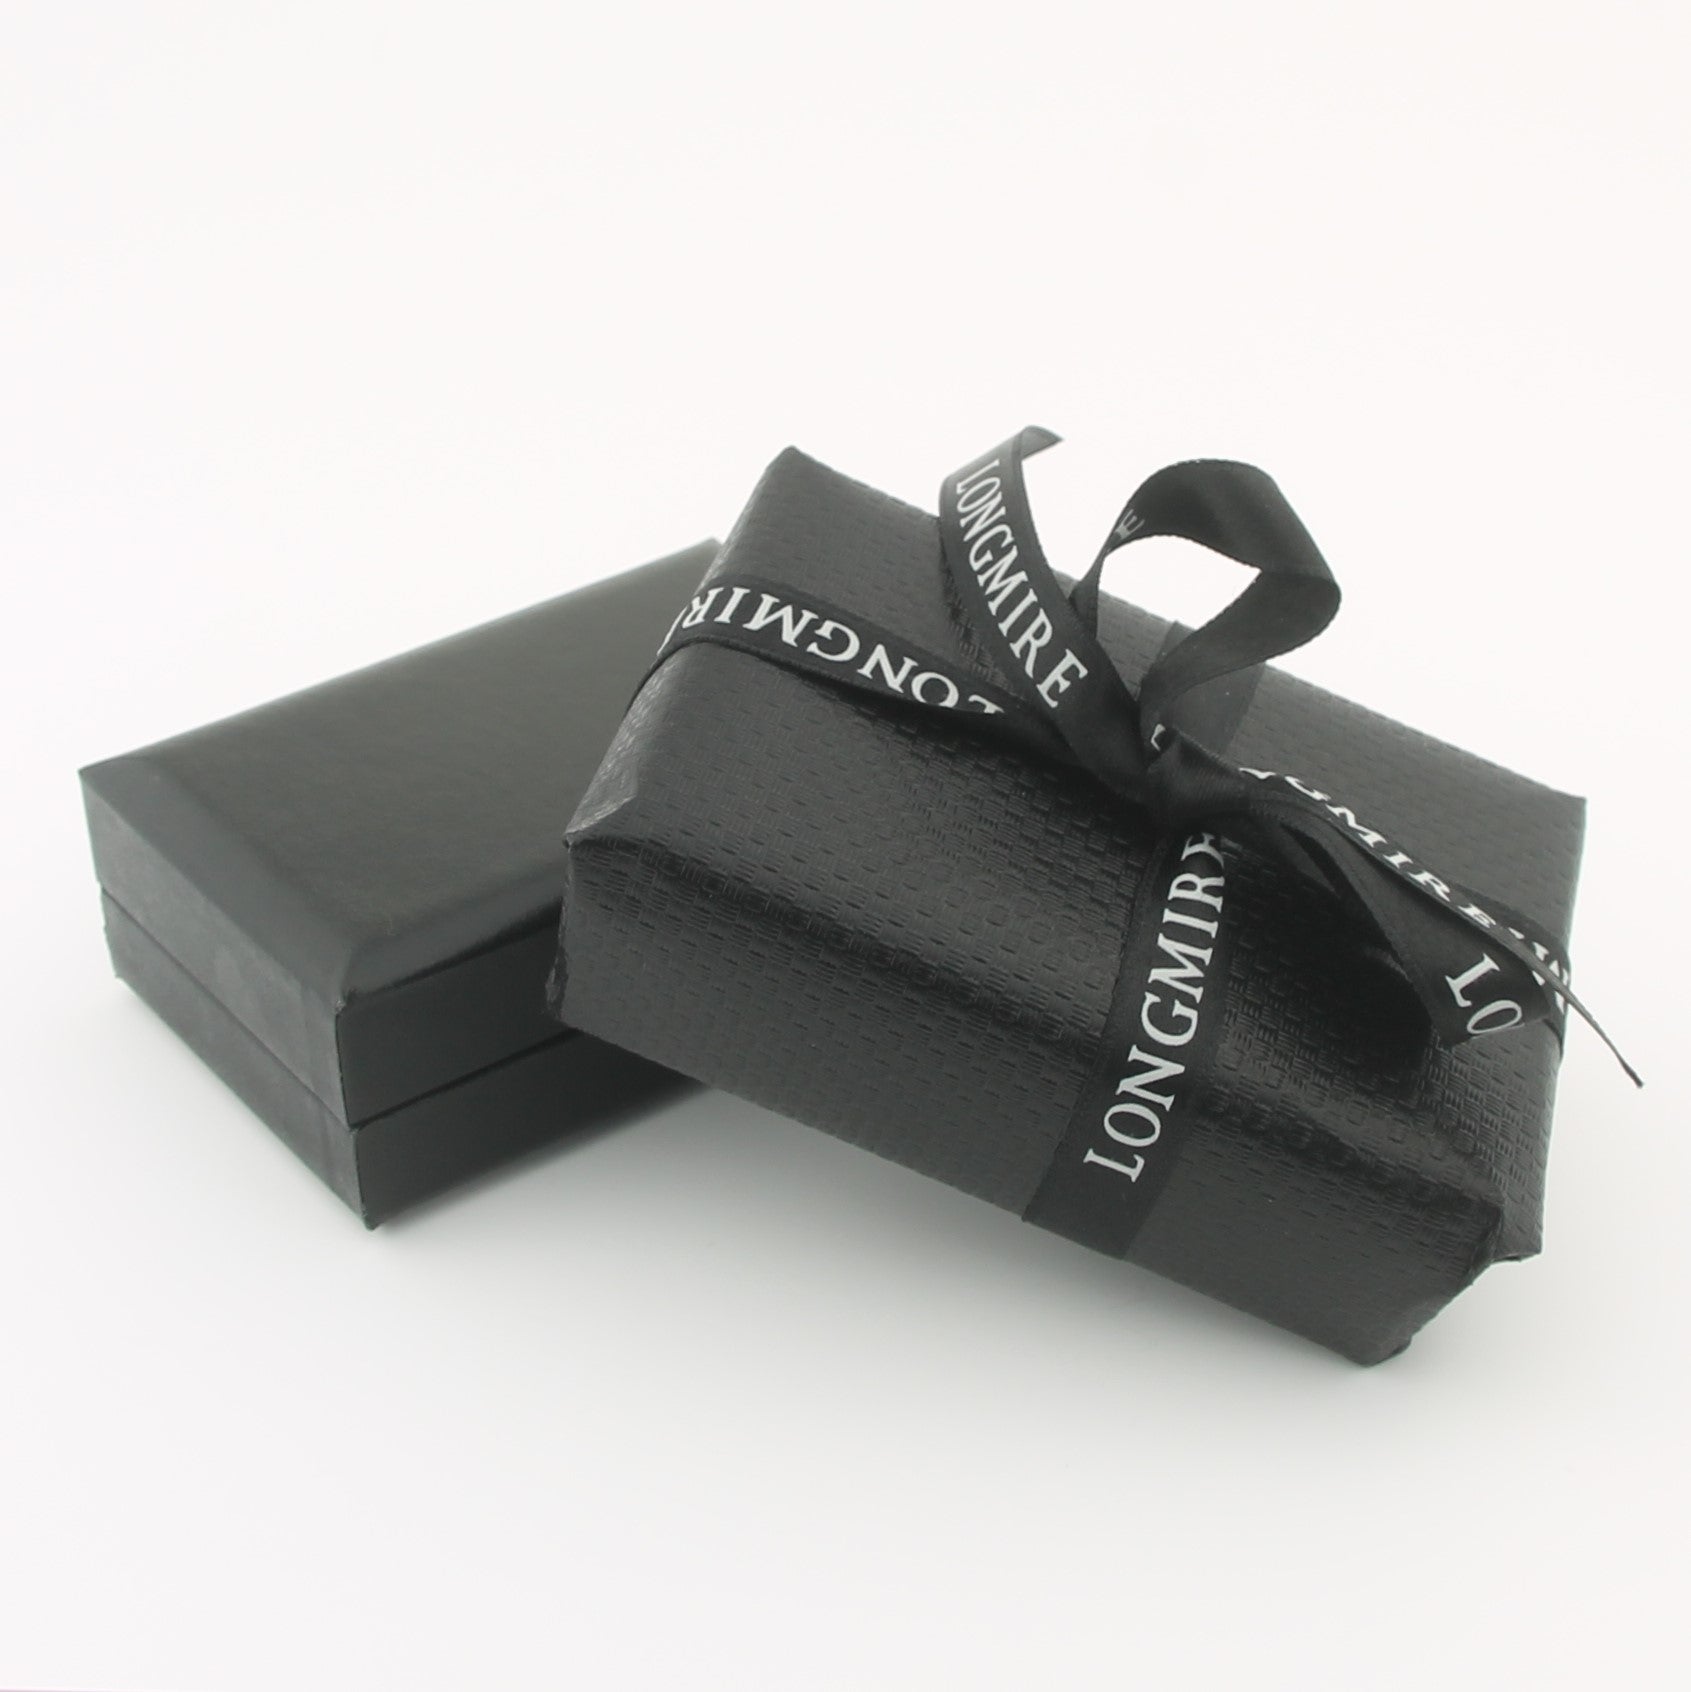 Longmire gift wrapped box